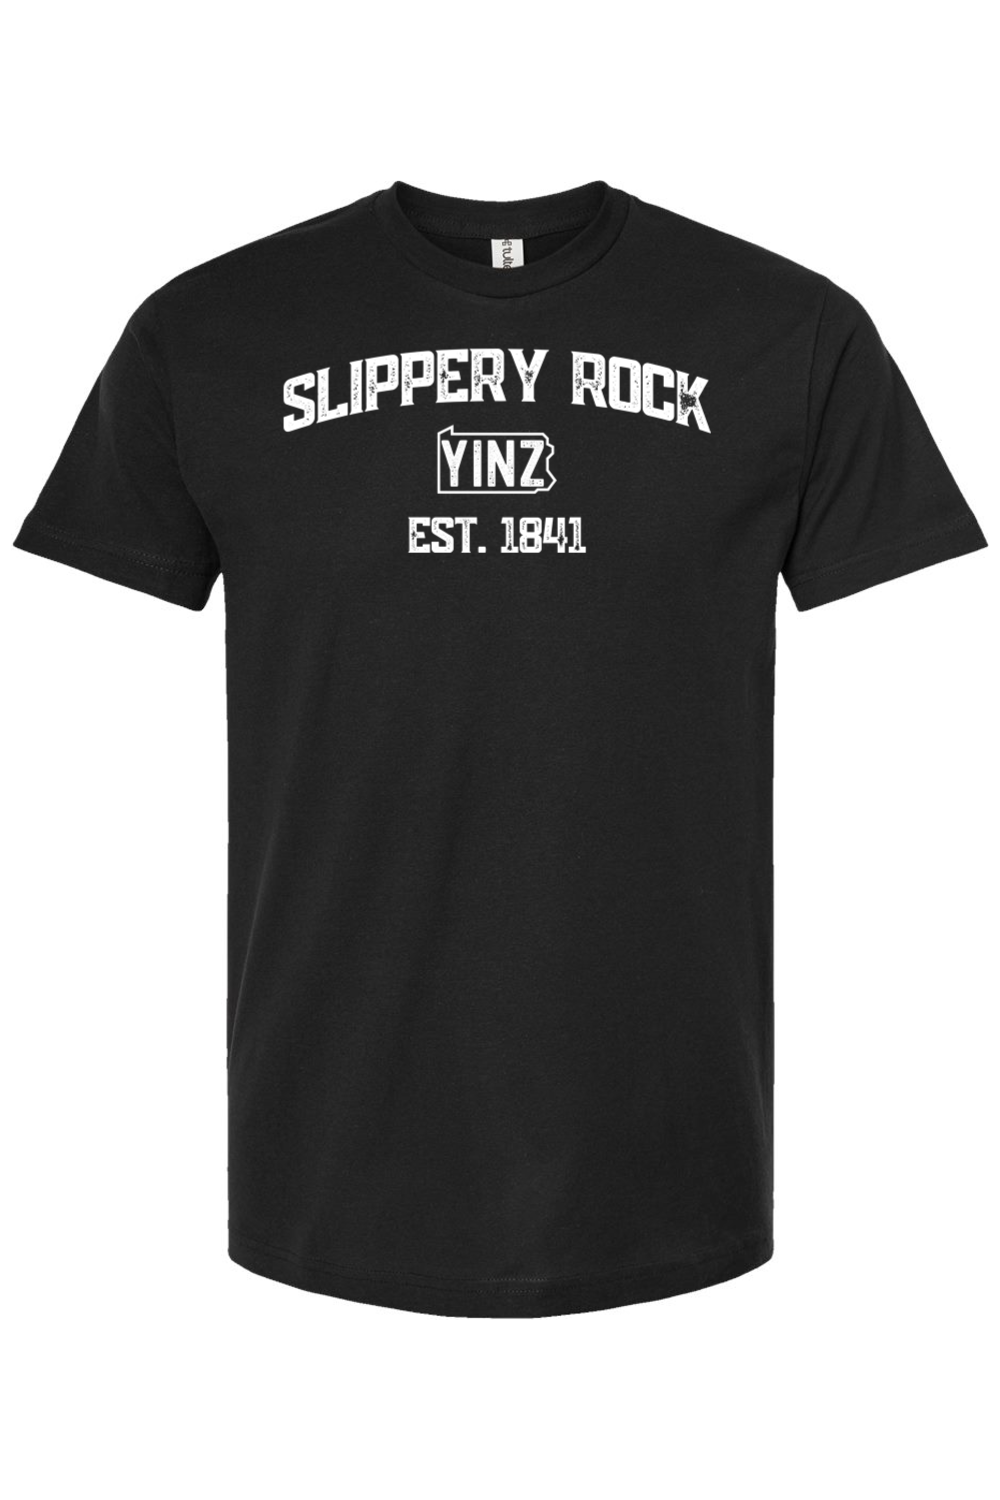 Slippery Rock Yinzylvania - Yinzylvania